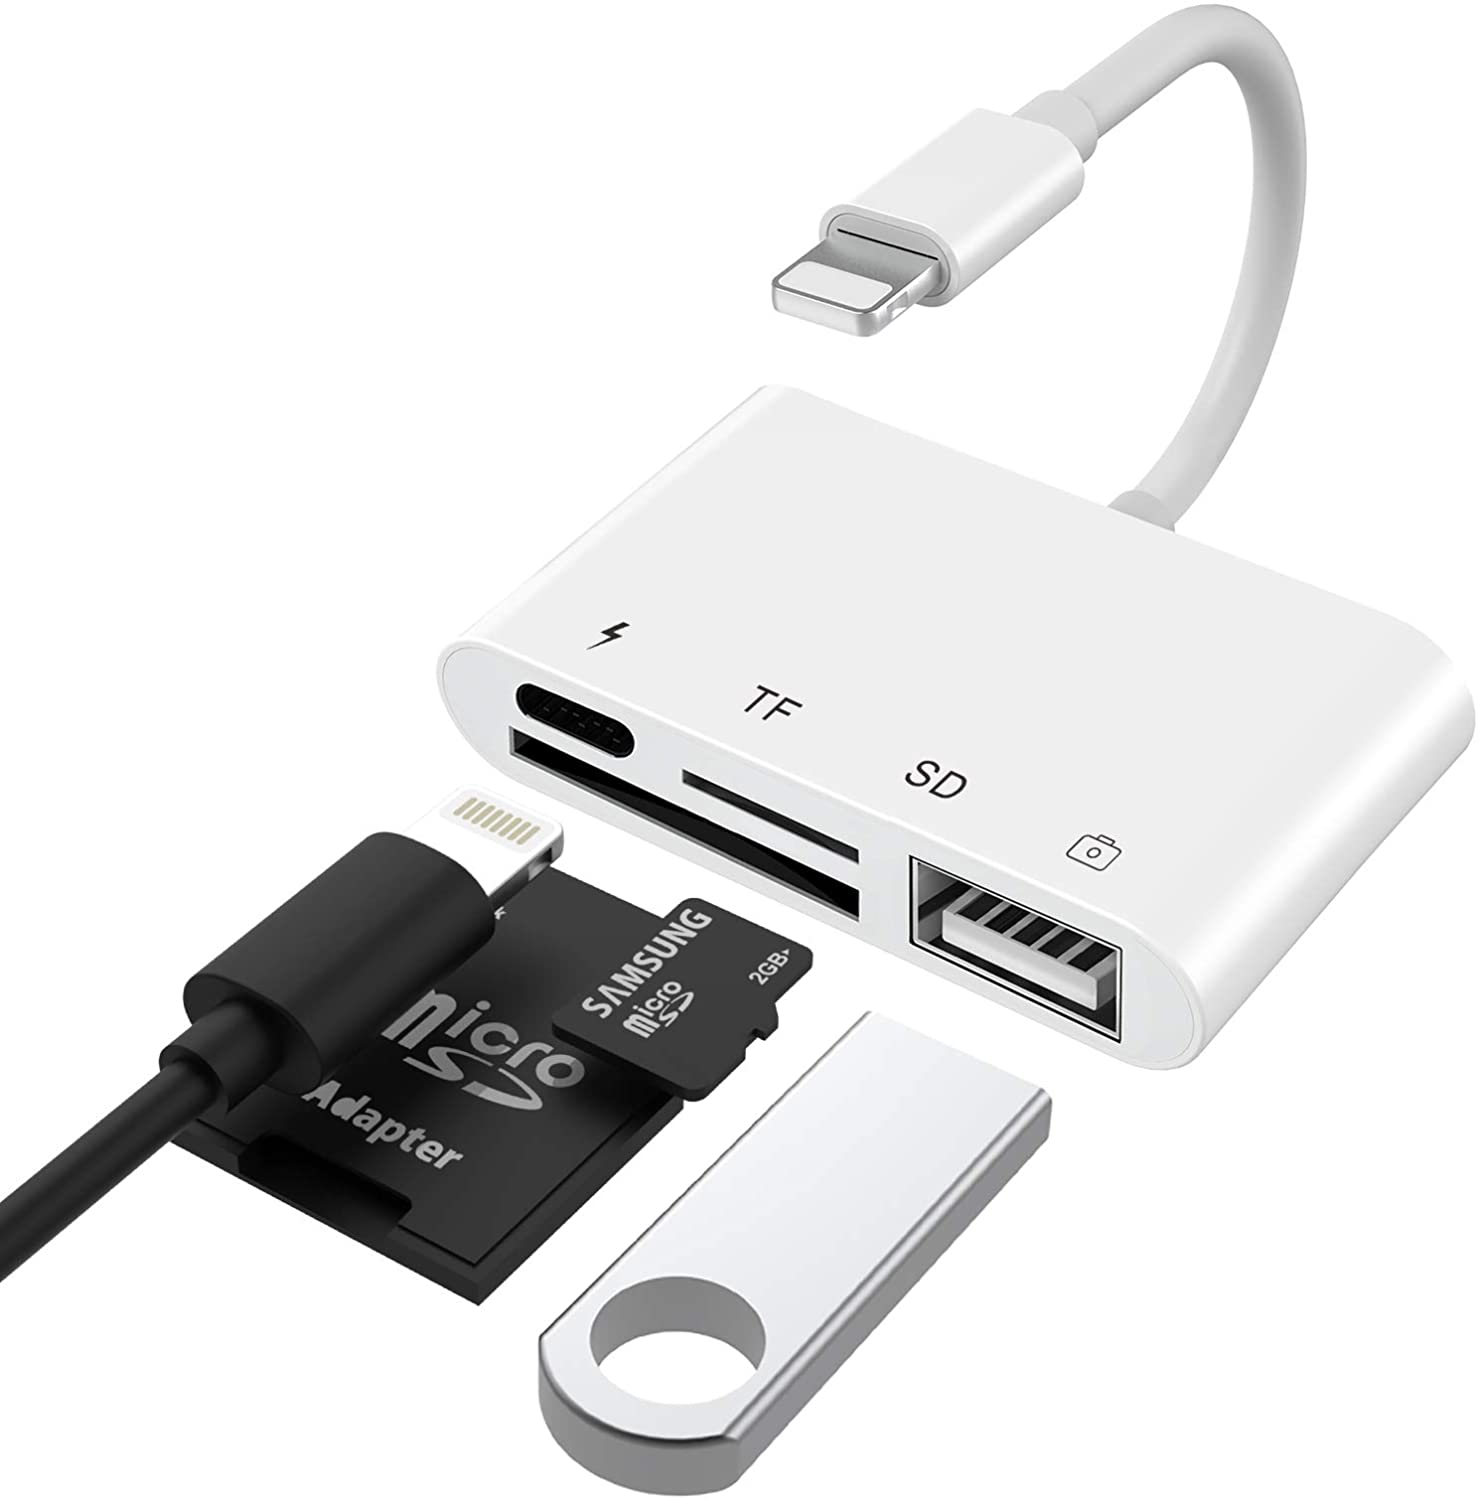 4 in1 Lightning to USB 3 Camera Adapter สำหรับ iPhone iPad iPod Touch เพื่อโอนถ่ายข้อมูลจาก กล้อง USB Flash Drive Memory Card Keyboard/Mouse Electronic Piano